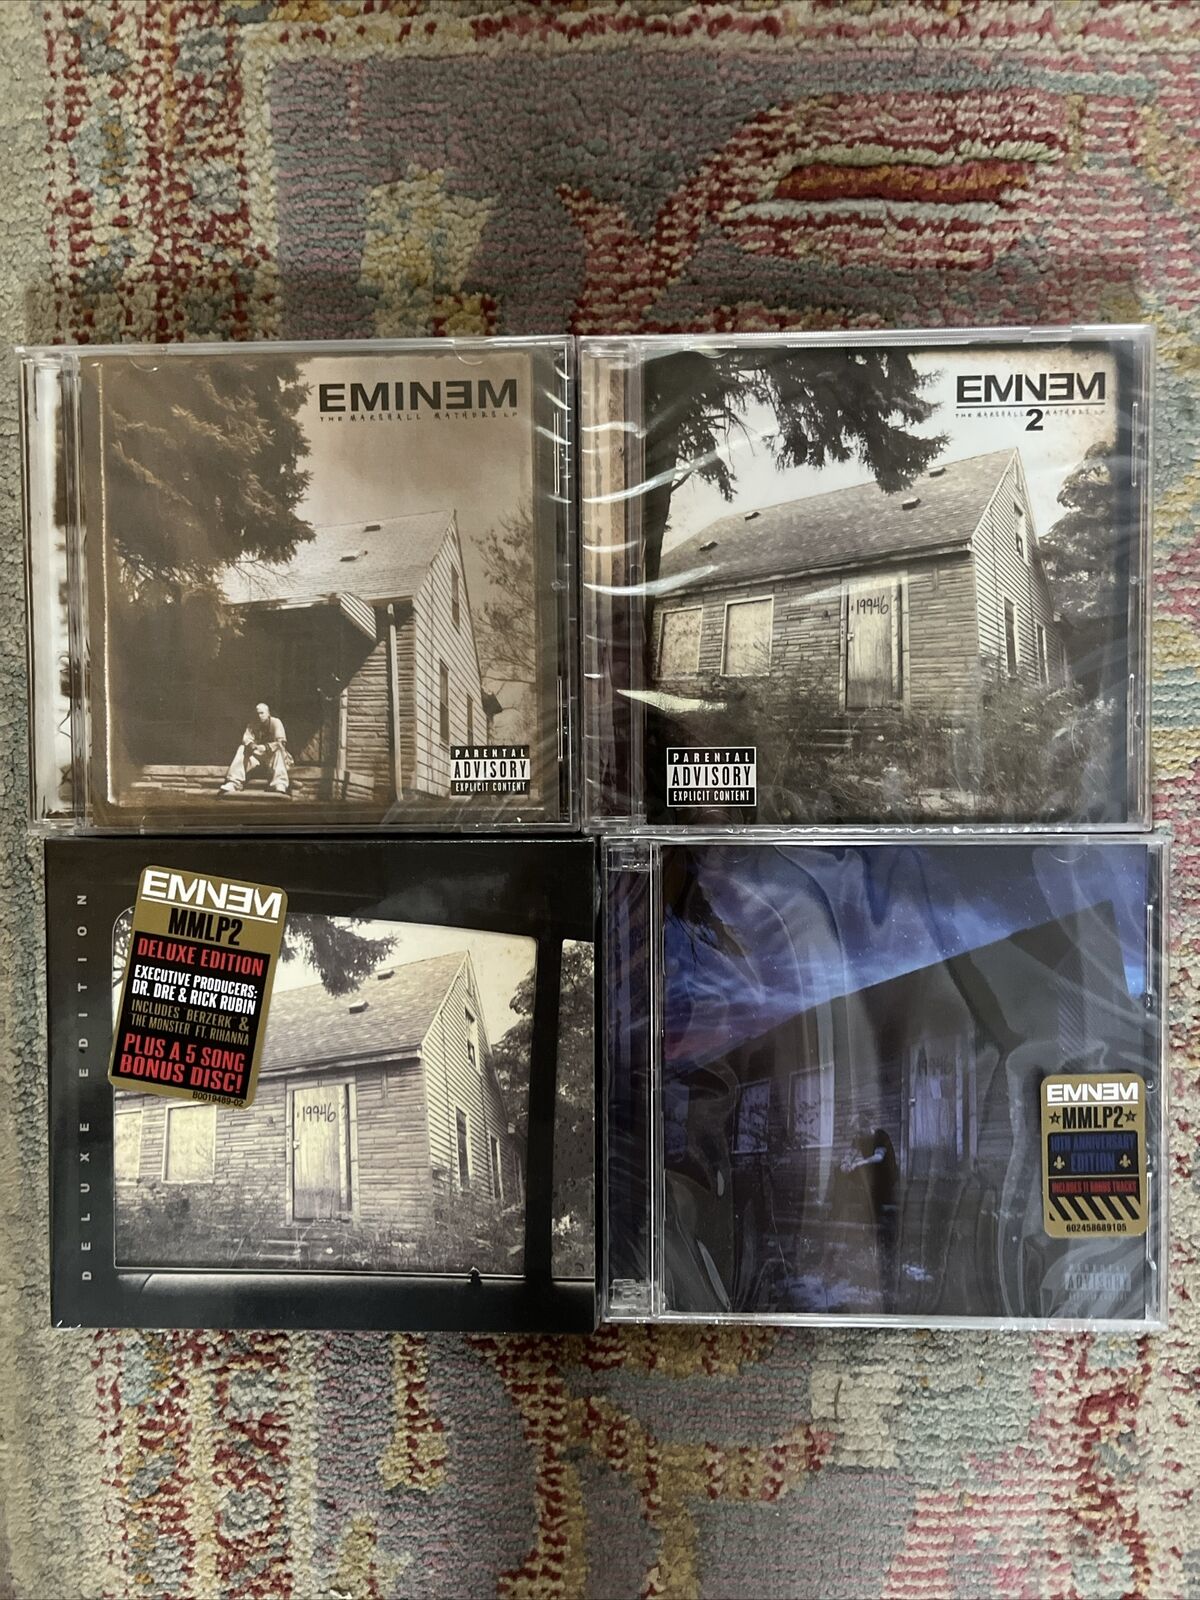 EMINEM 3 SEALED CD Versions Of Marshall Mathers LP 2 MMLP2 (5 CDs) + 1 CD MMLP